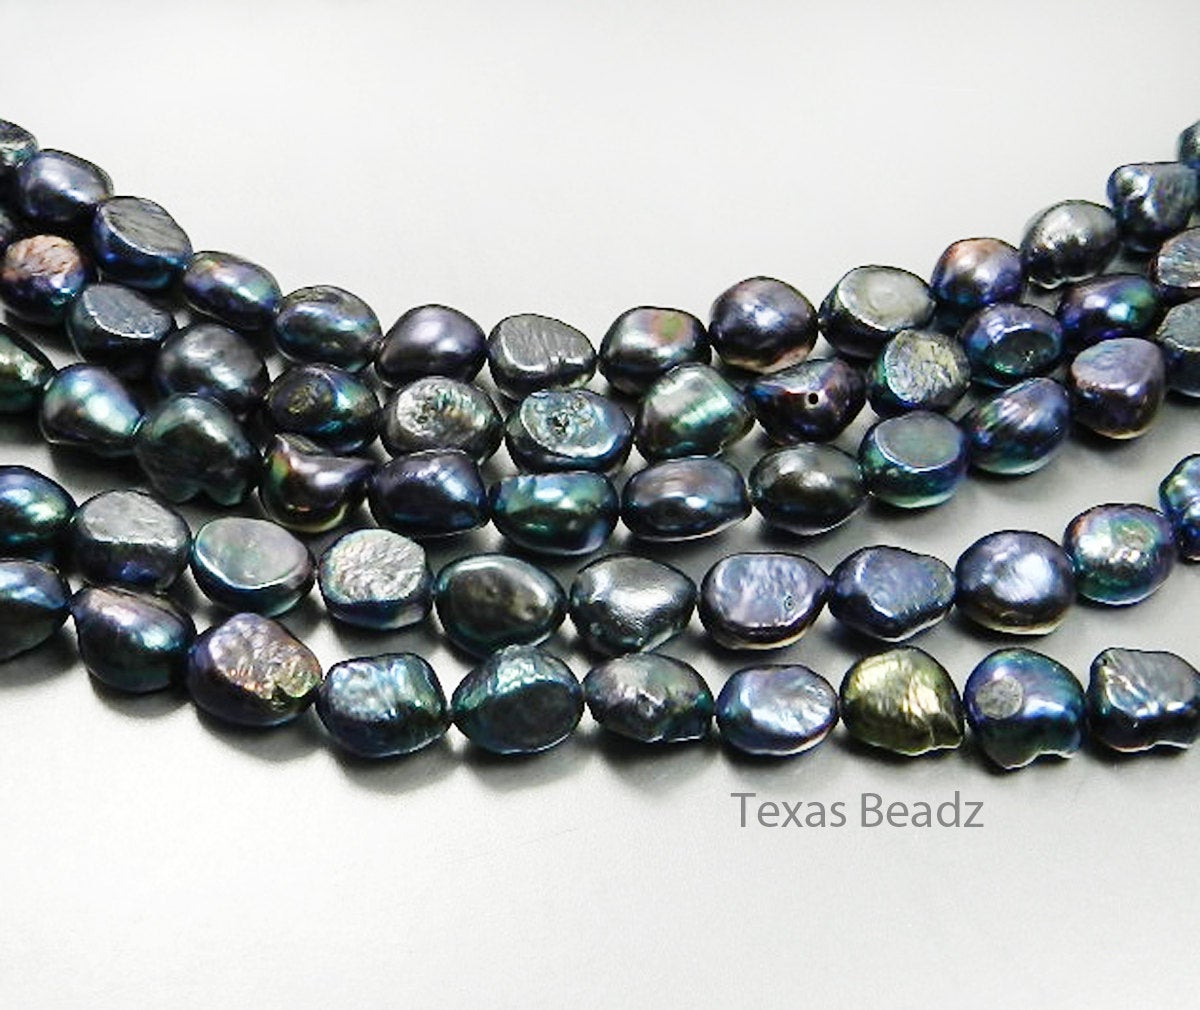 Black Pearls Peacock Pearls Loose Pearl Beads in Bulk Nugget Flat Back 11mm x 8mm Freshwater Pearl Beads https://t.co/fe1ygnhC5B #jewelry #DIYjewelry #DIY #pearls #jewelrysupplies https://t.co/lOcCqYcTIe